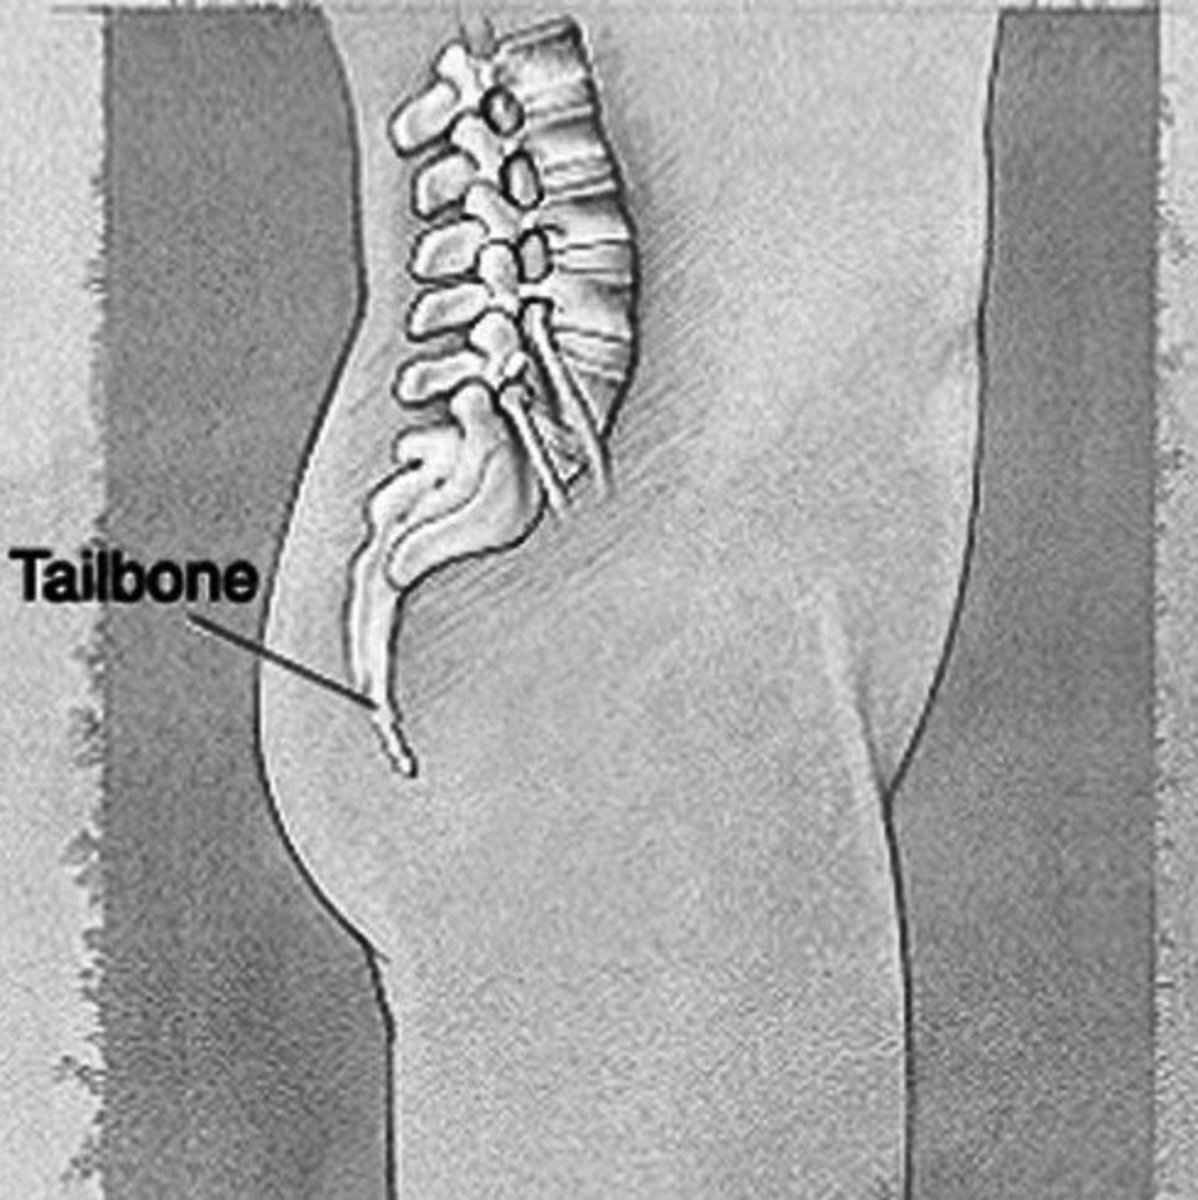 Bruised tailbone - Symptoms, Causes, Treatment, Healing time